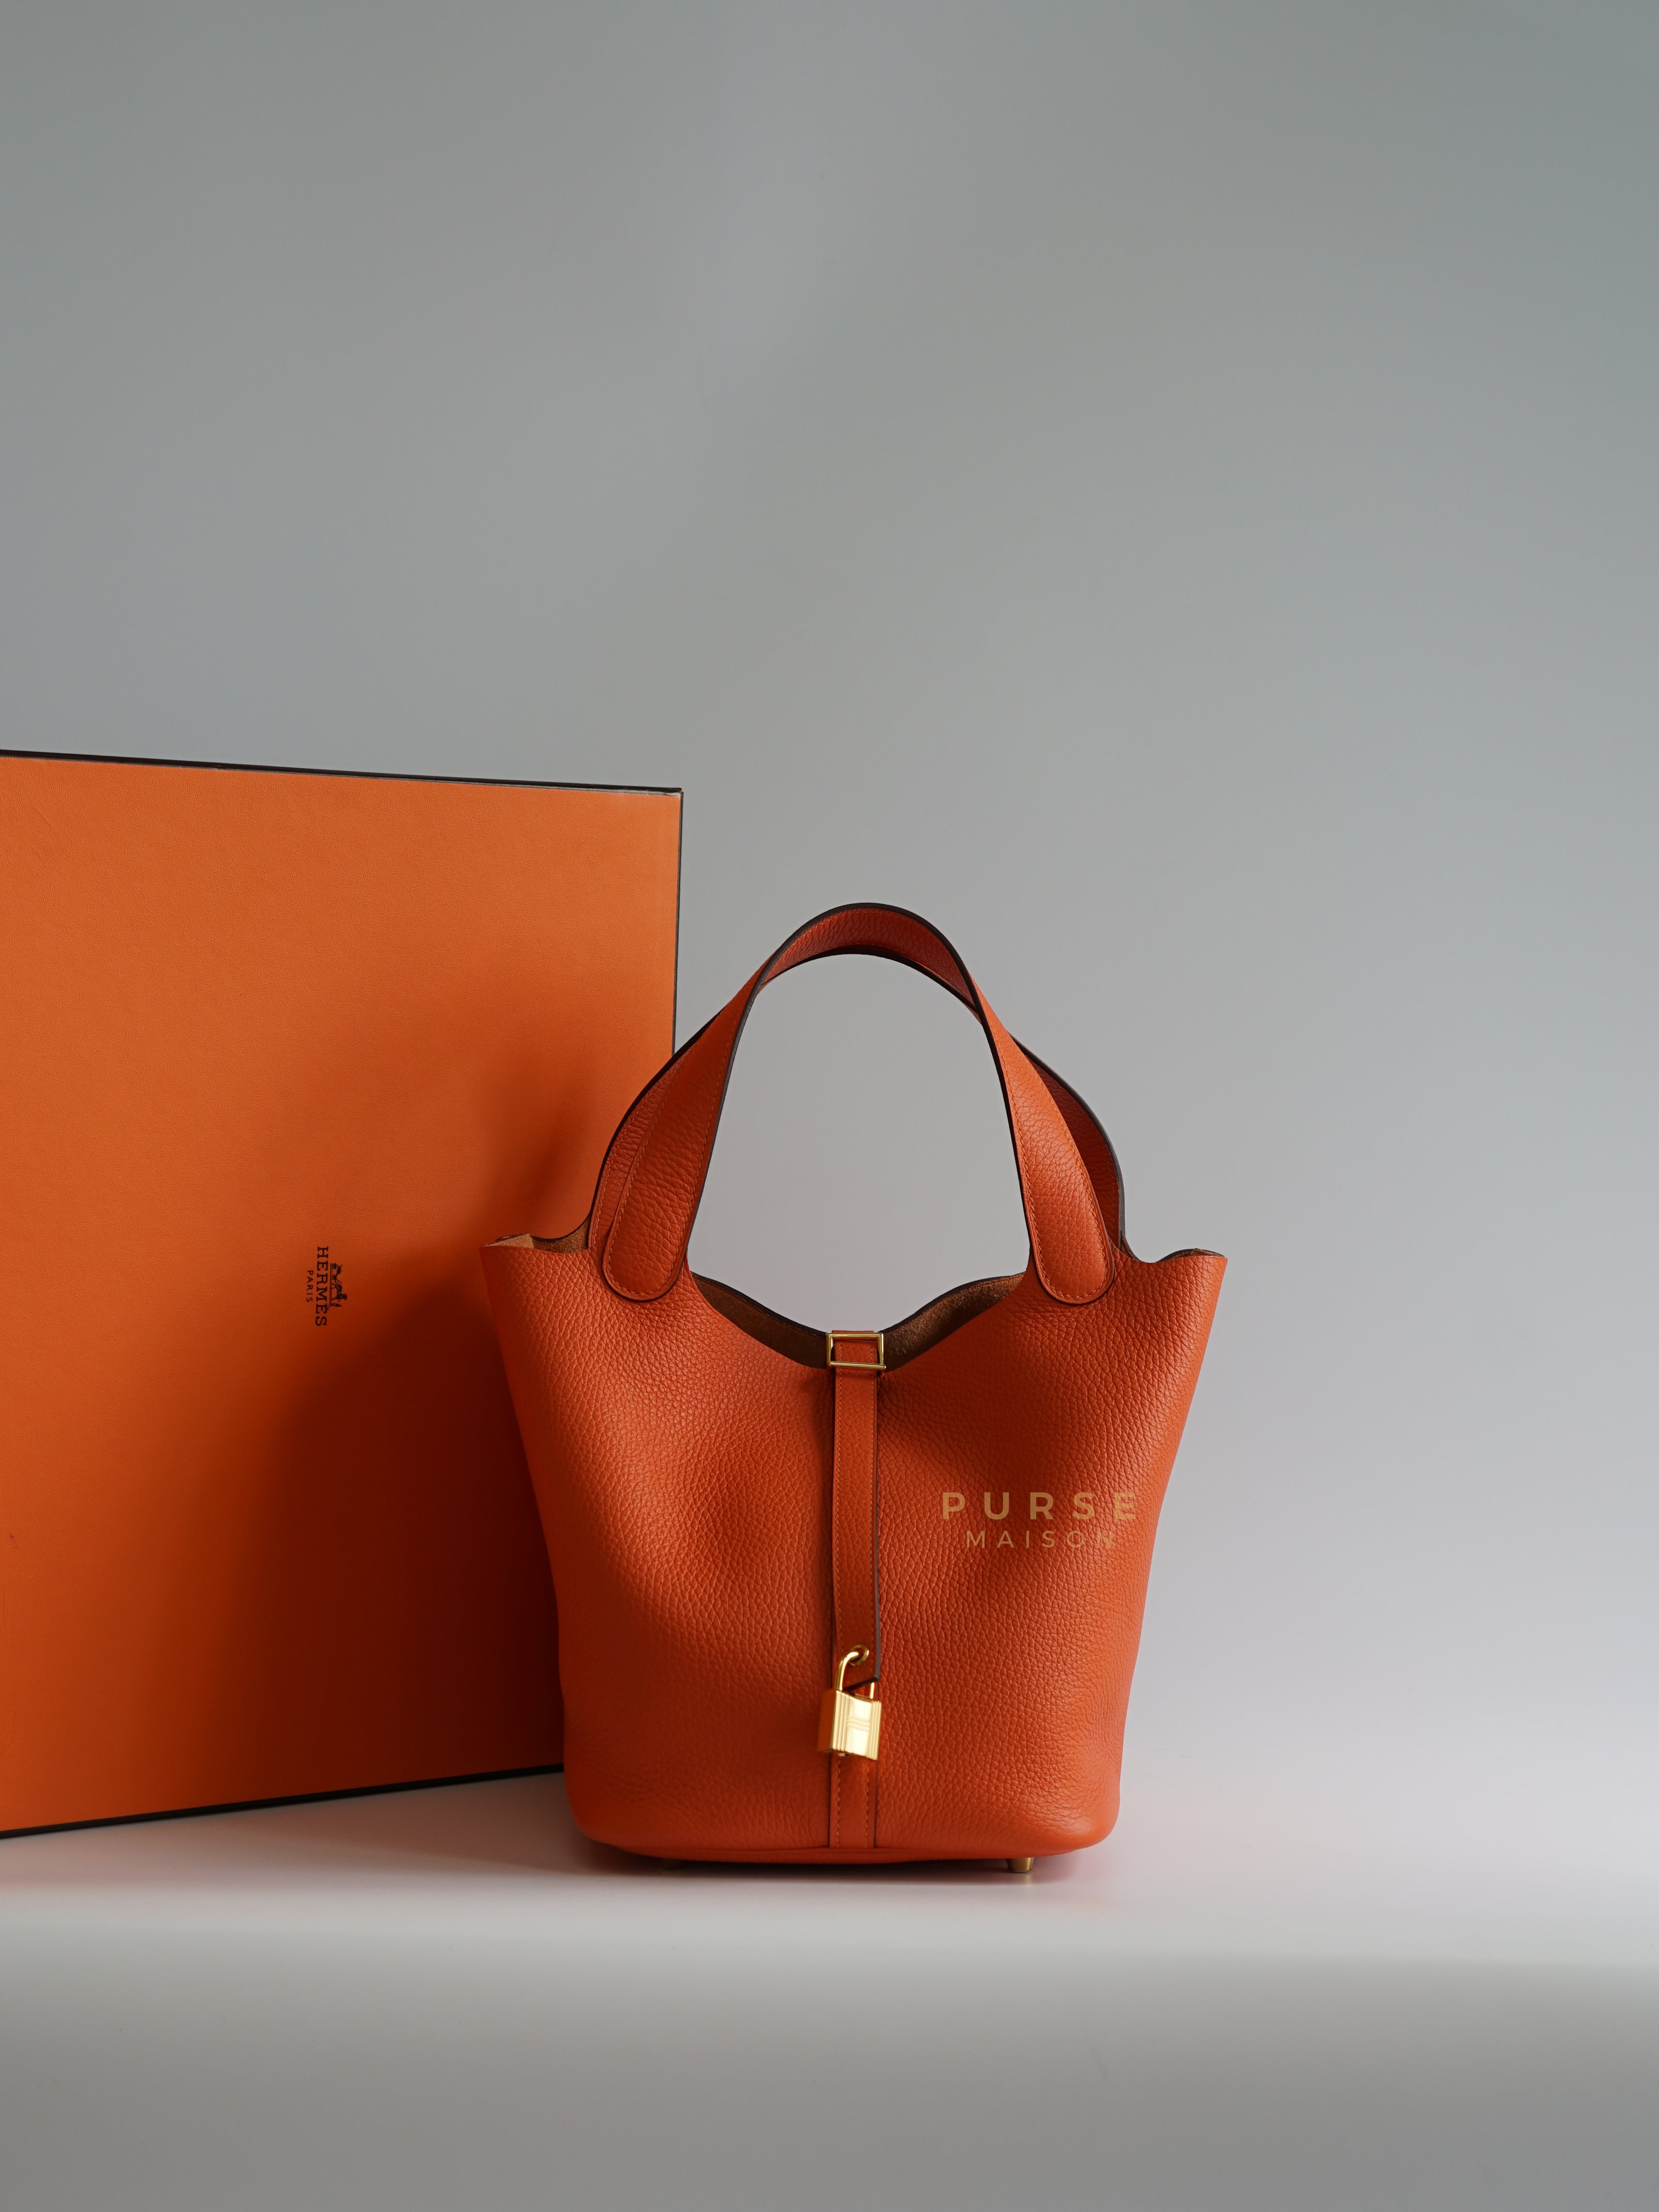 Picotin Lock 22 Orange Taurillon Clemence Gold Hardware Stamp U | Purse Maison Luxury Bags Shop